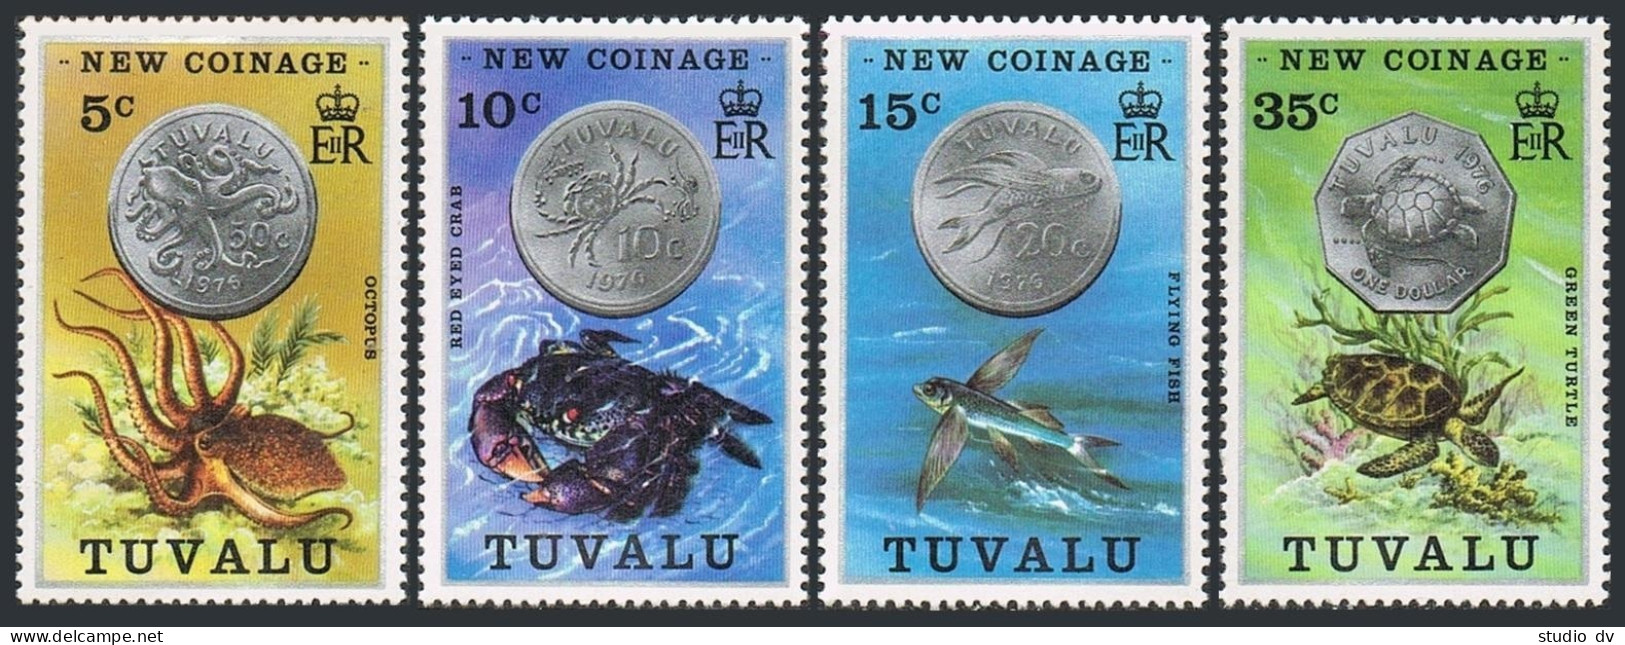 Tuvalu 19-22, MNH. Michel 19-22. New Coinage 1976. Octopus, Crab, Fish, Turtle. - Tuvalu